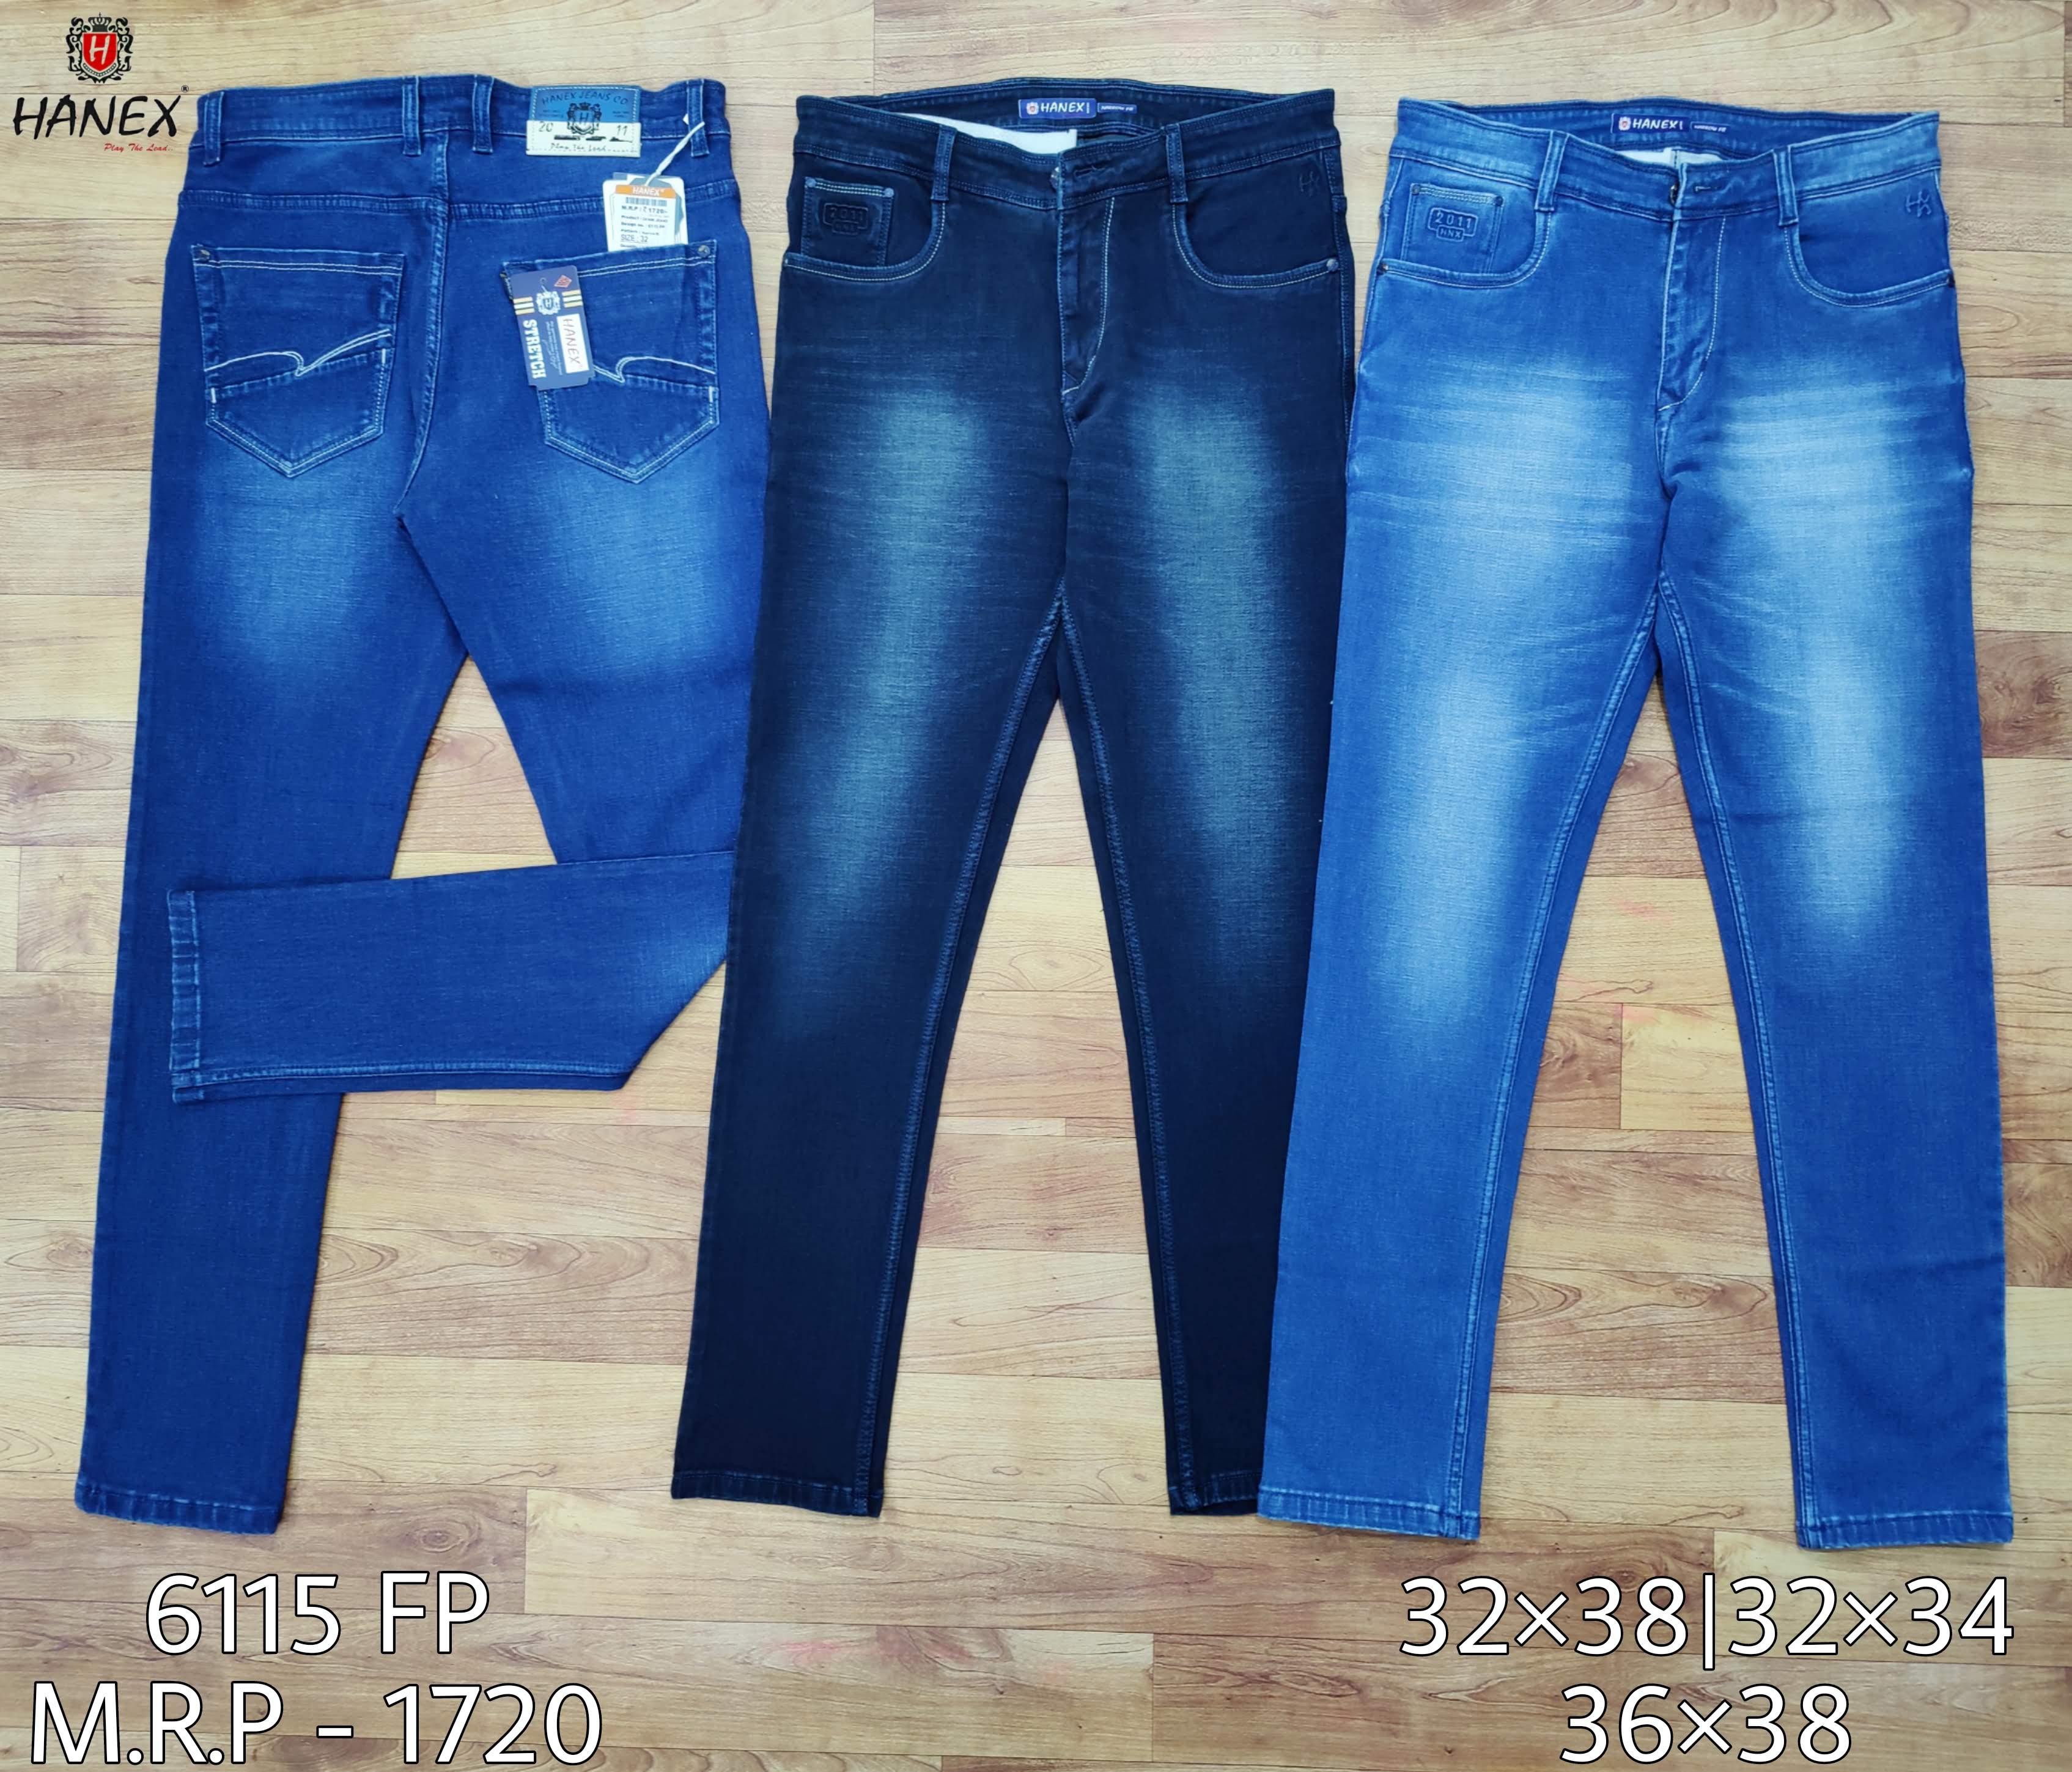 Hanex Fancy Men''s Denim Jeans